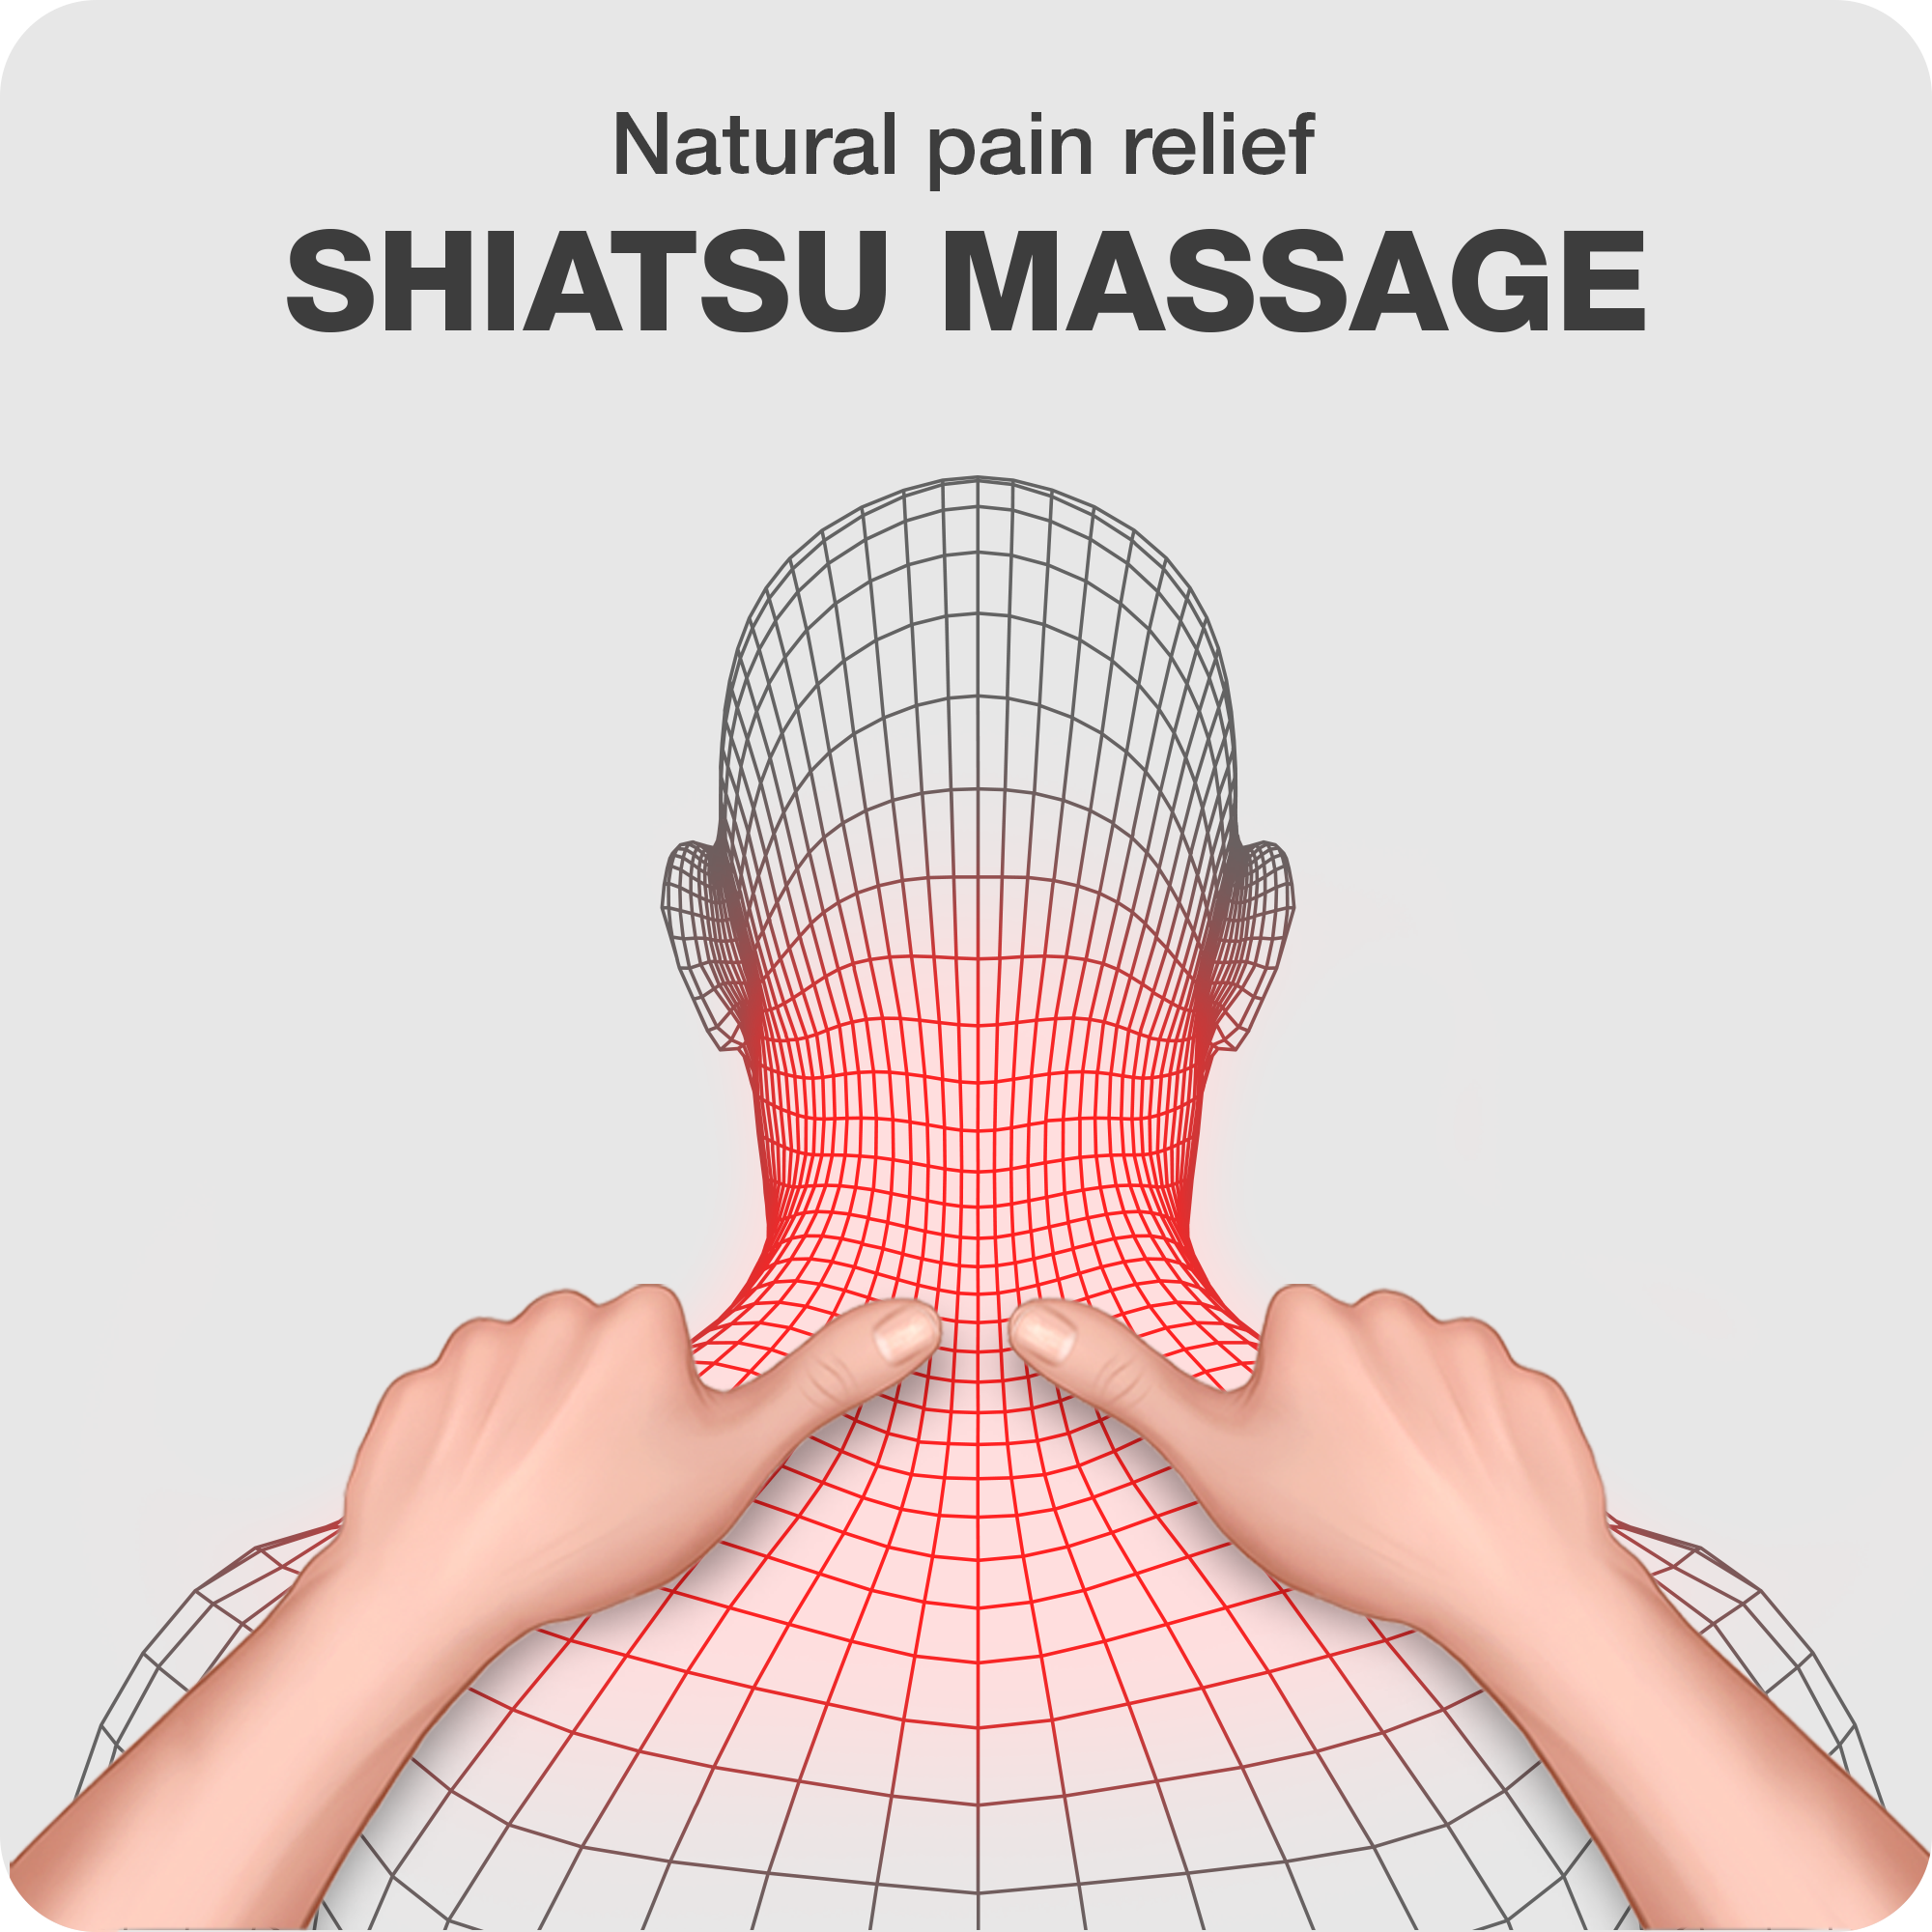 human hands performing shiatsu massage on neck muscles